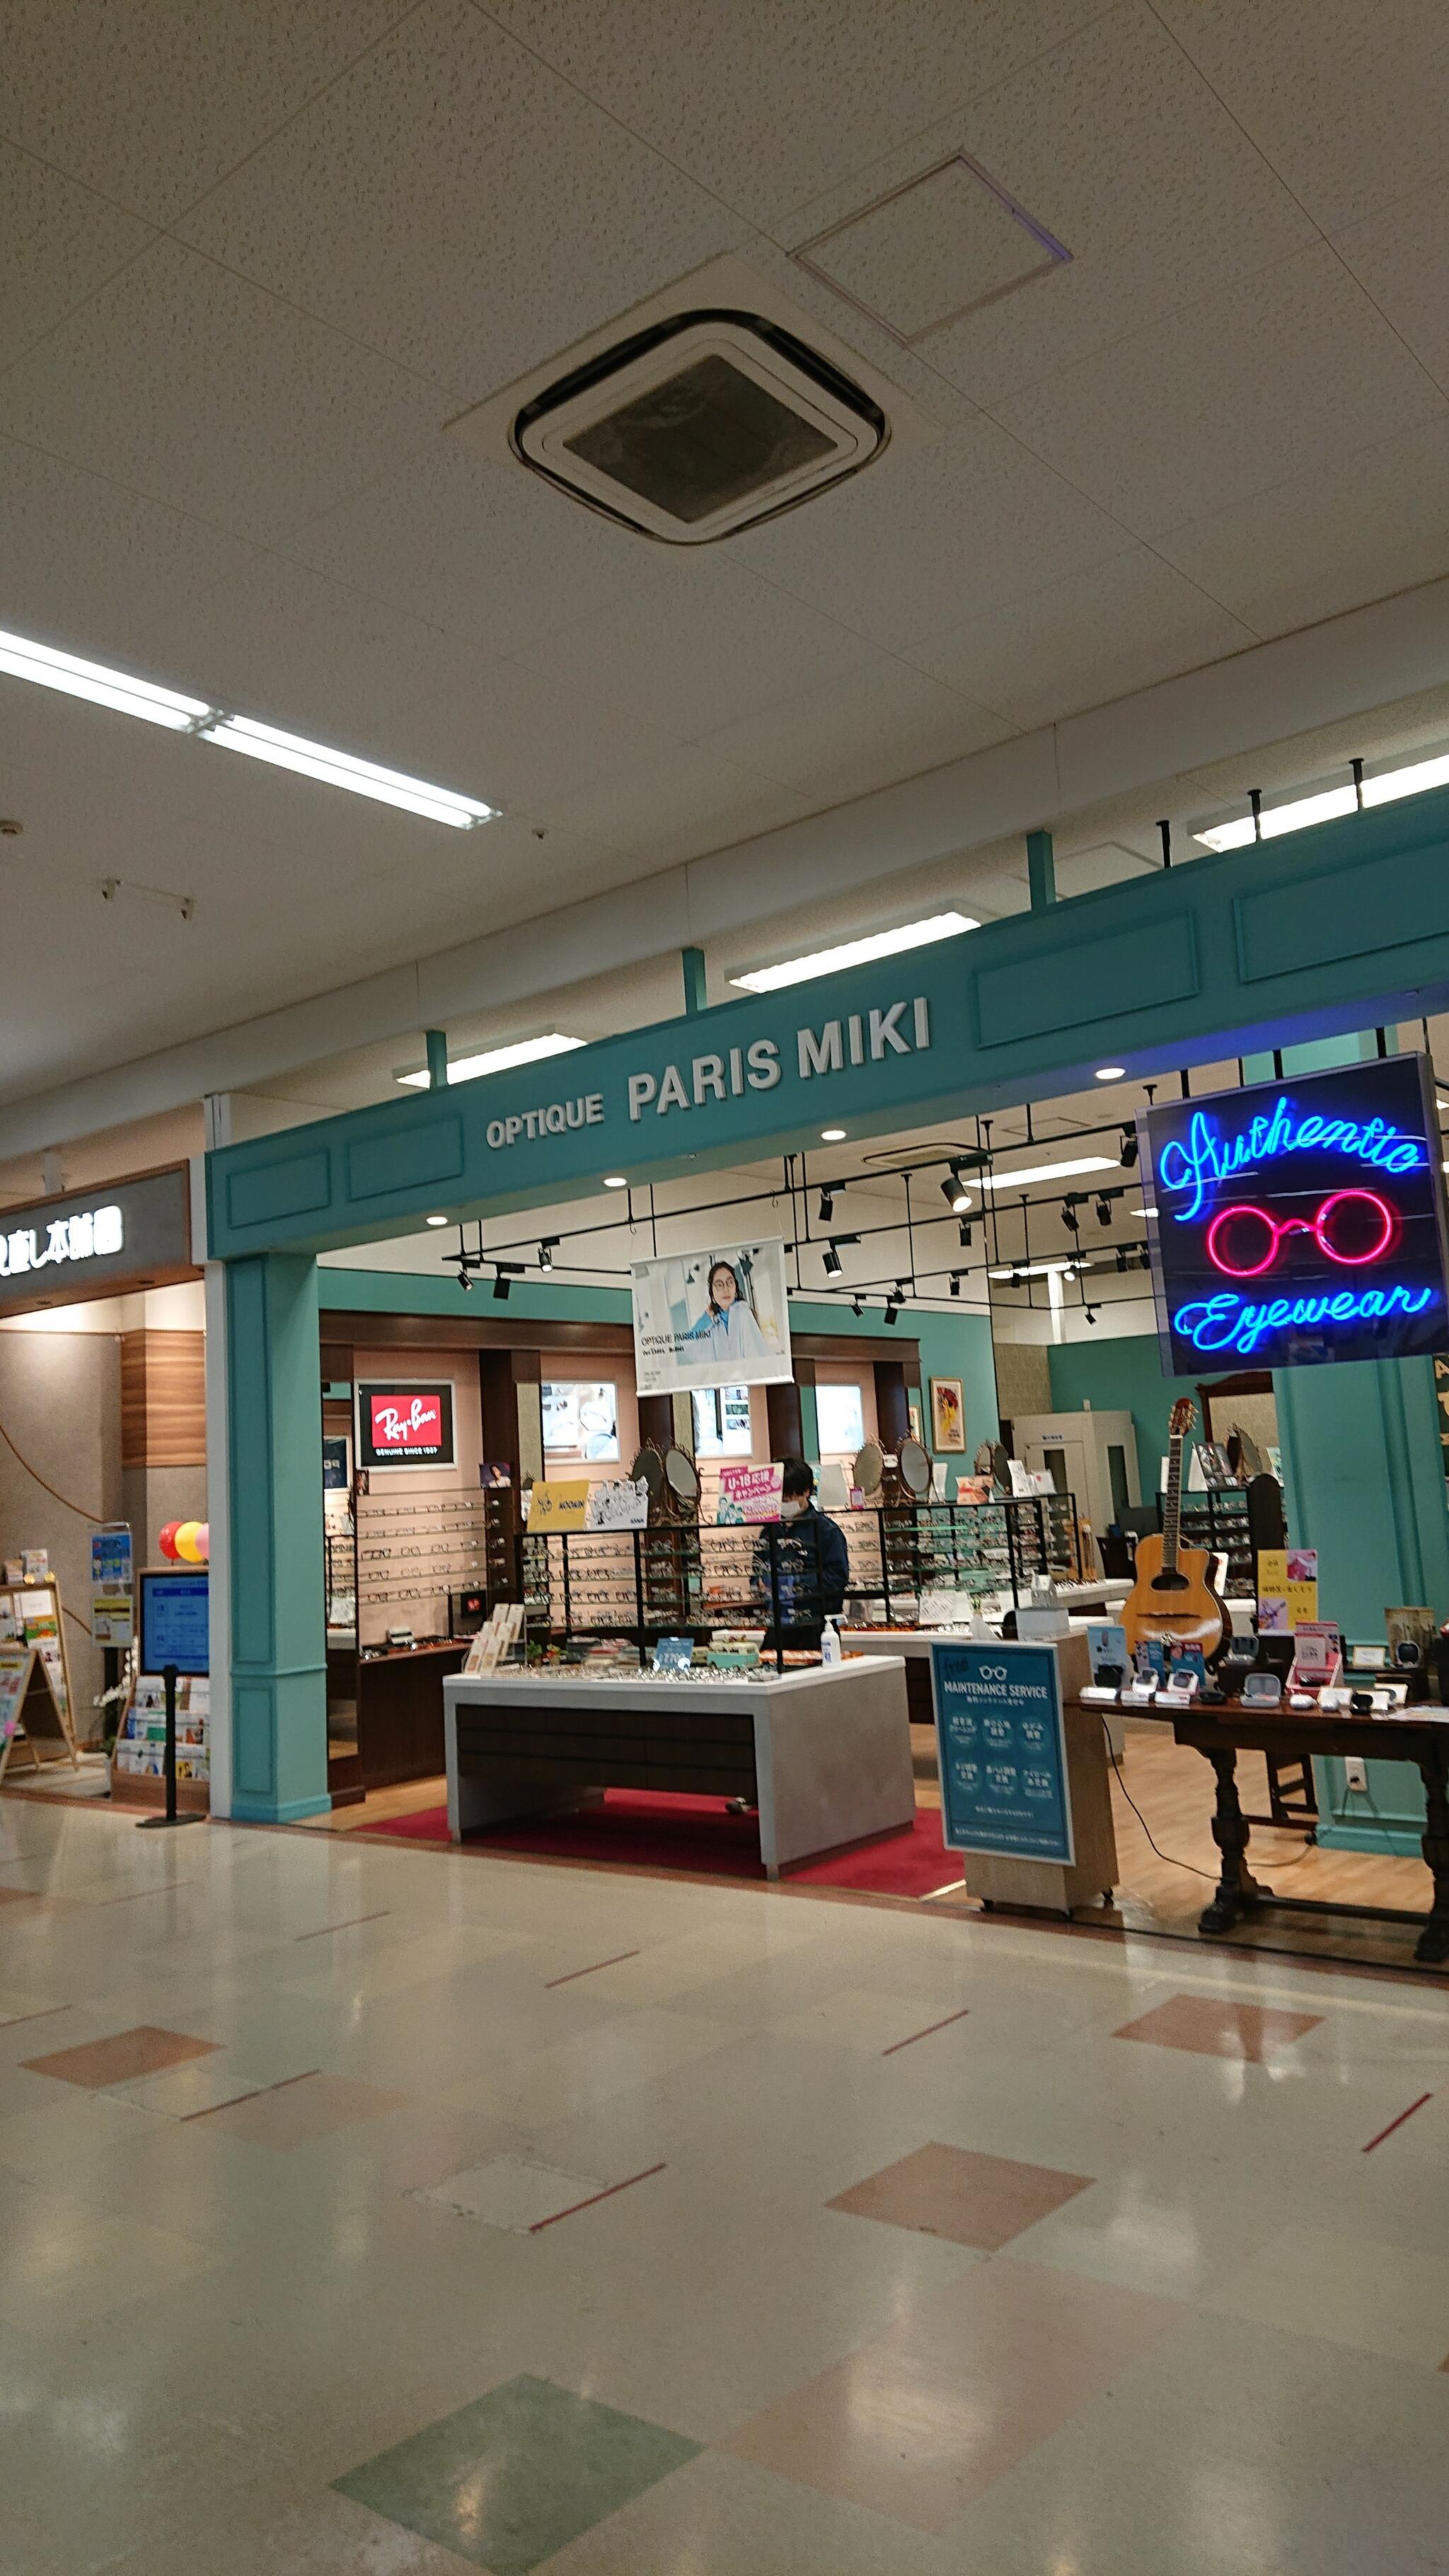 OPTIQUE PARIS MIKI イオンスーパーセンター一関店の代表写真3